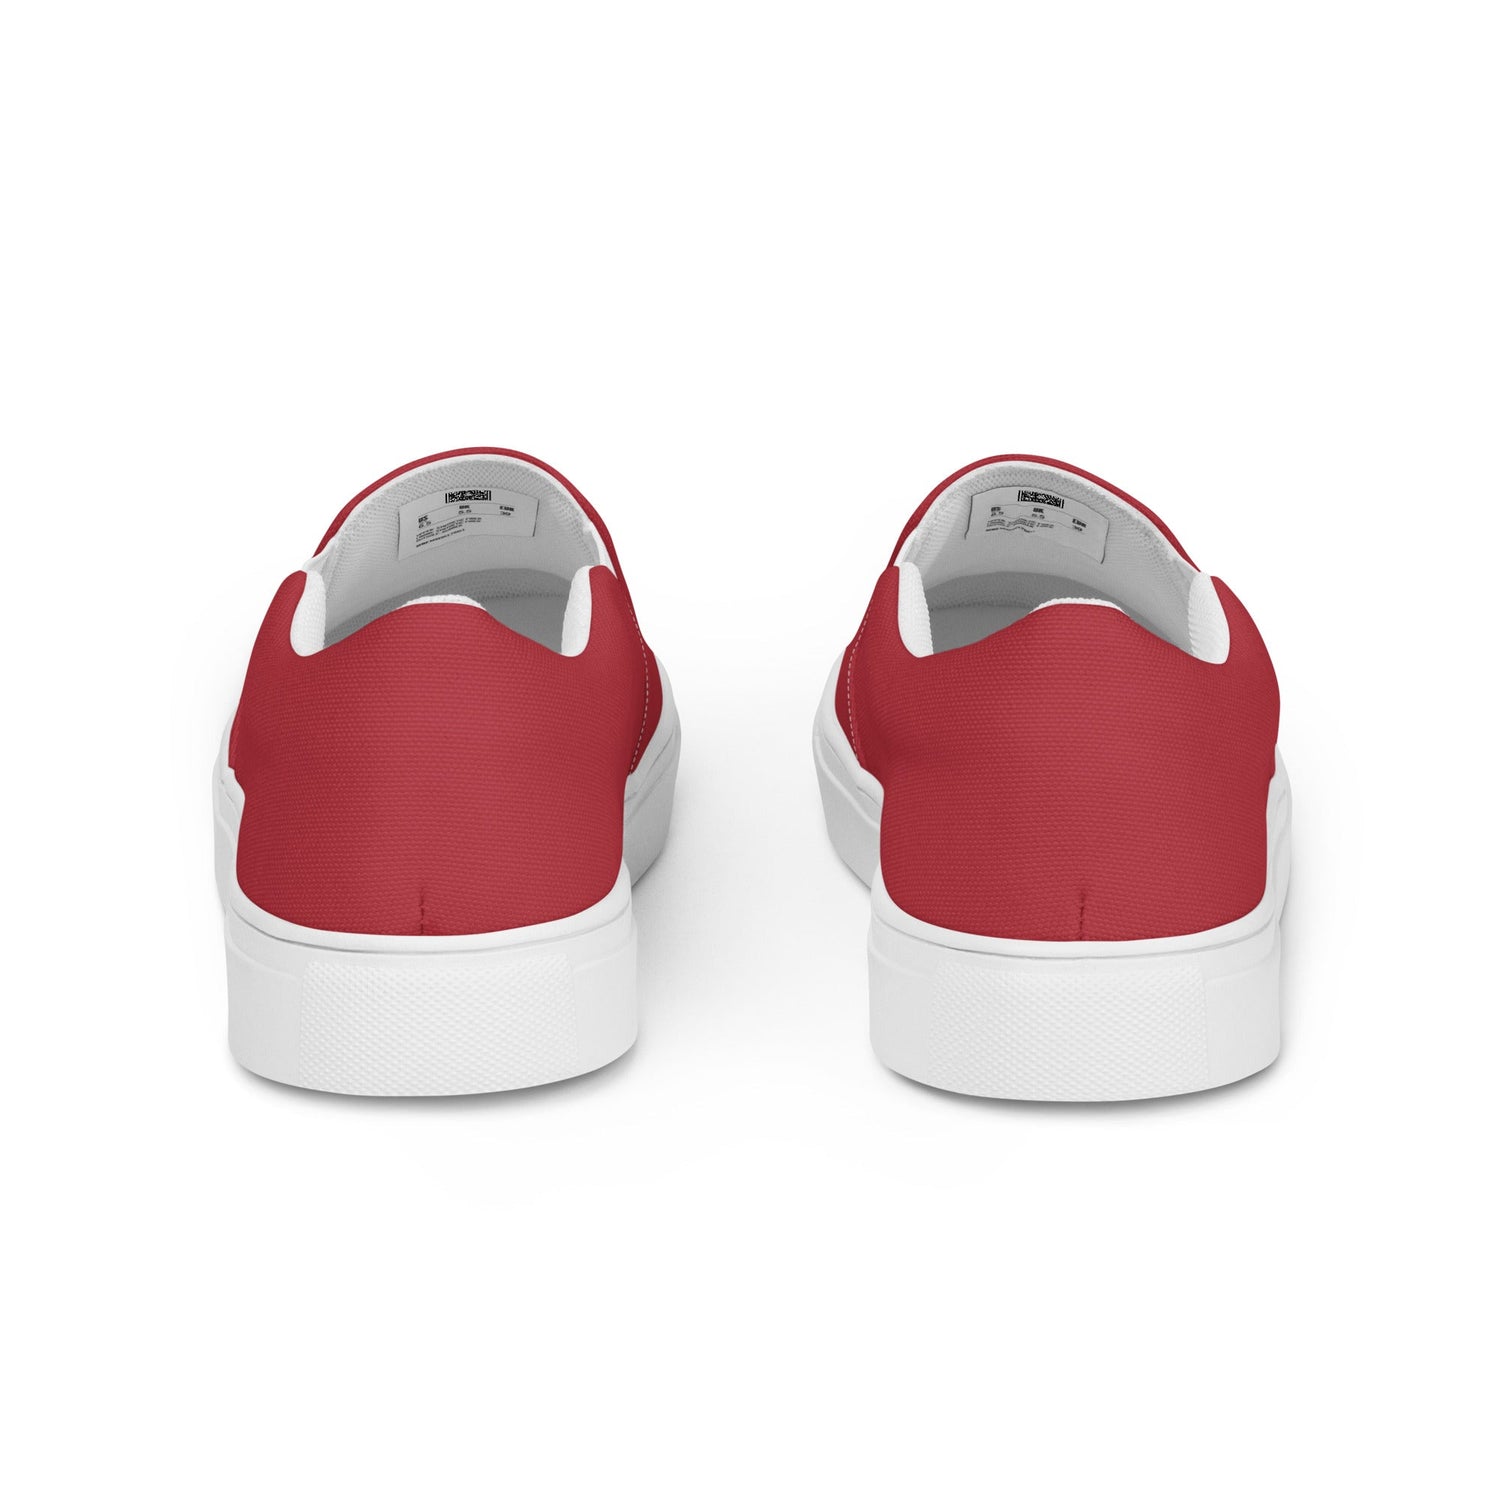 klasneakers Women’s slip-on canvas shoes - Red